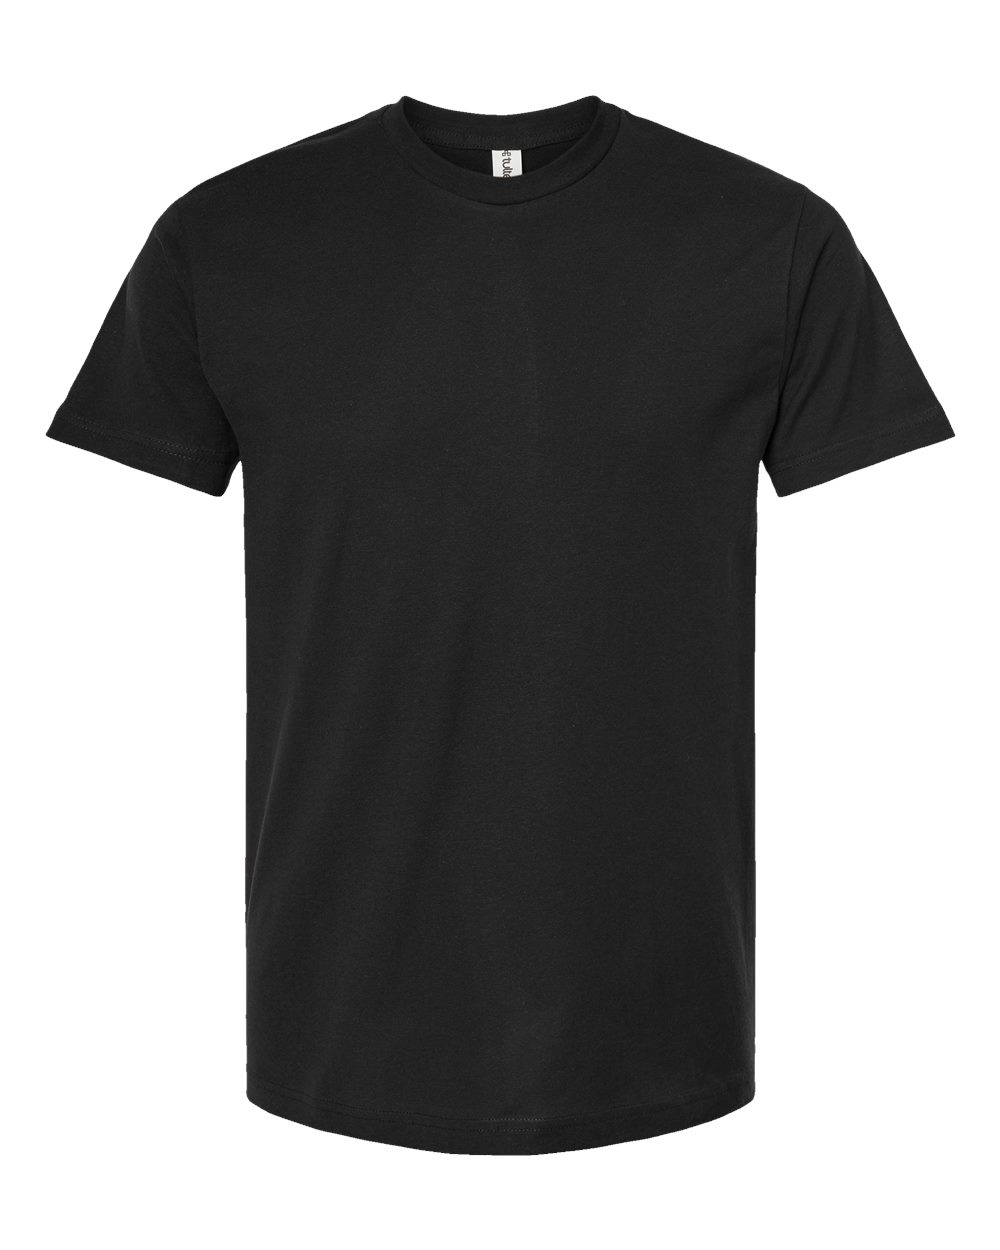 Women's Fit - Custom Shirts / T-Shirts (V-neck)